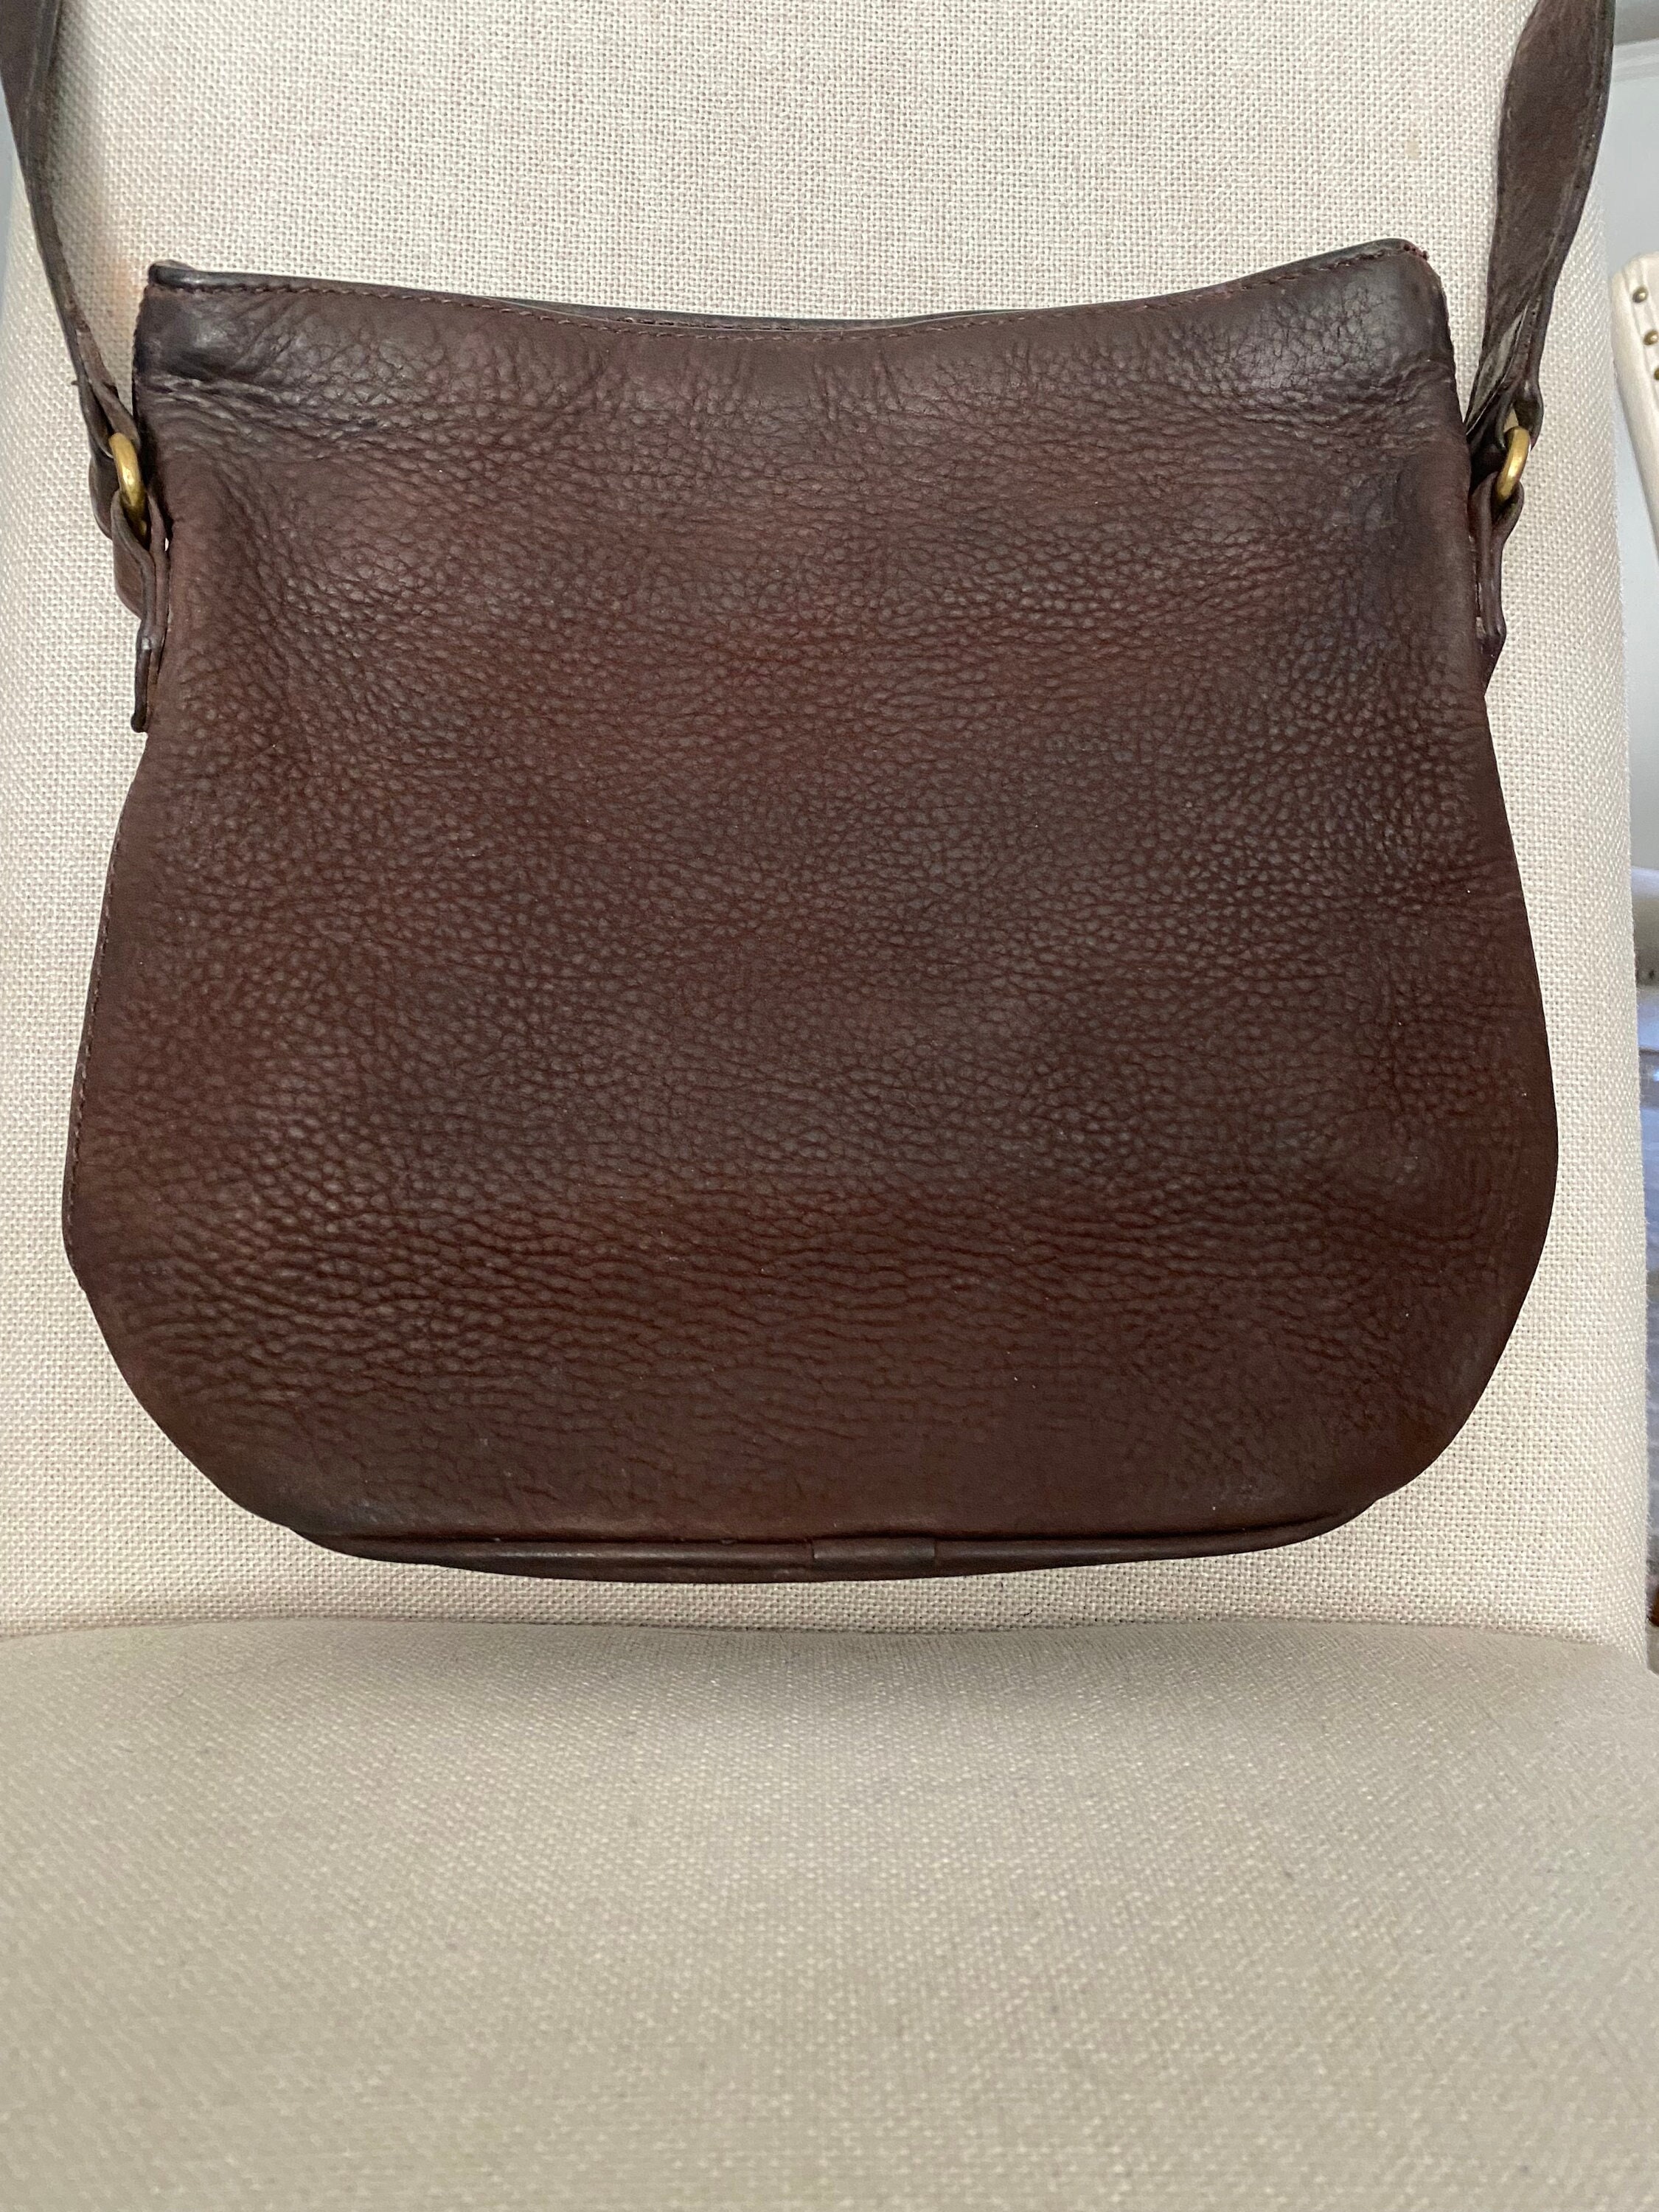 vintage Coach bag - Bags and purses